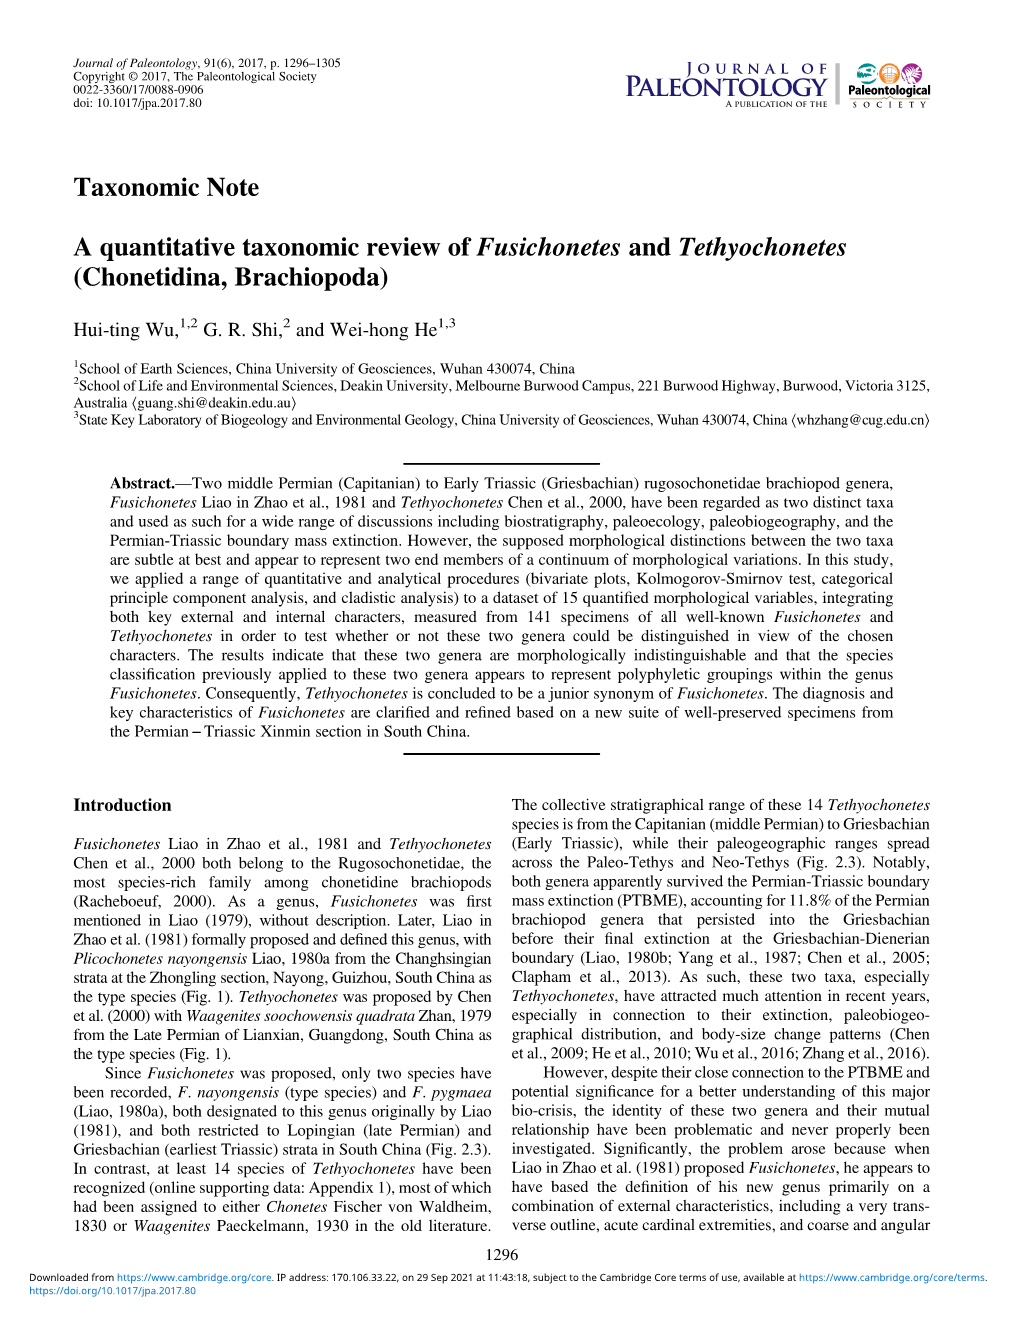 Taxonomic Note a Quantitative Taxonomic Review of Fusichonetes